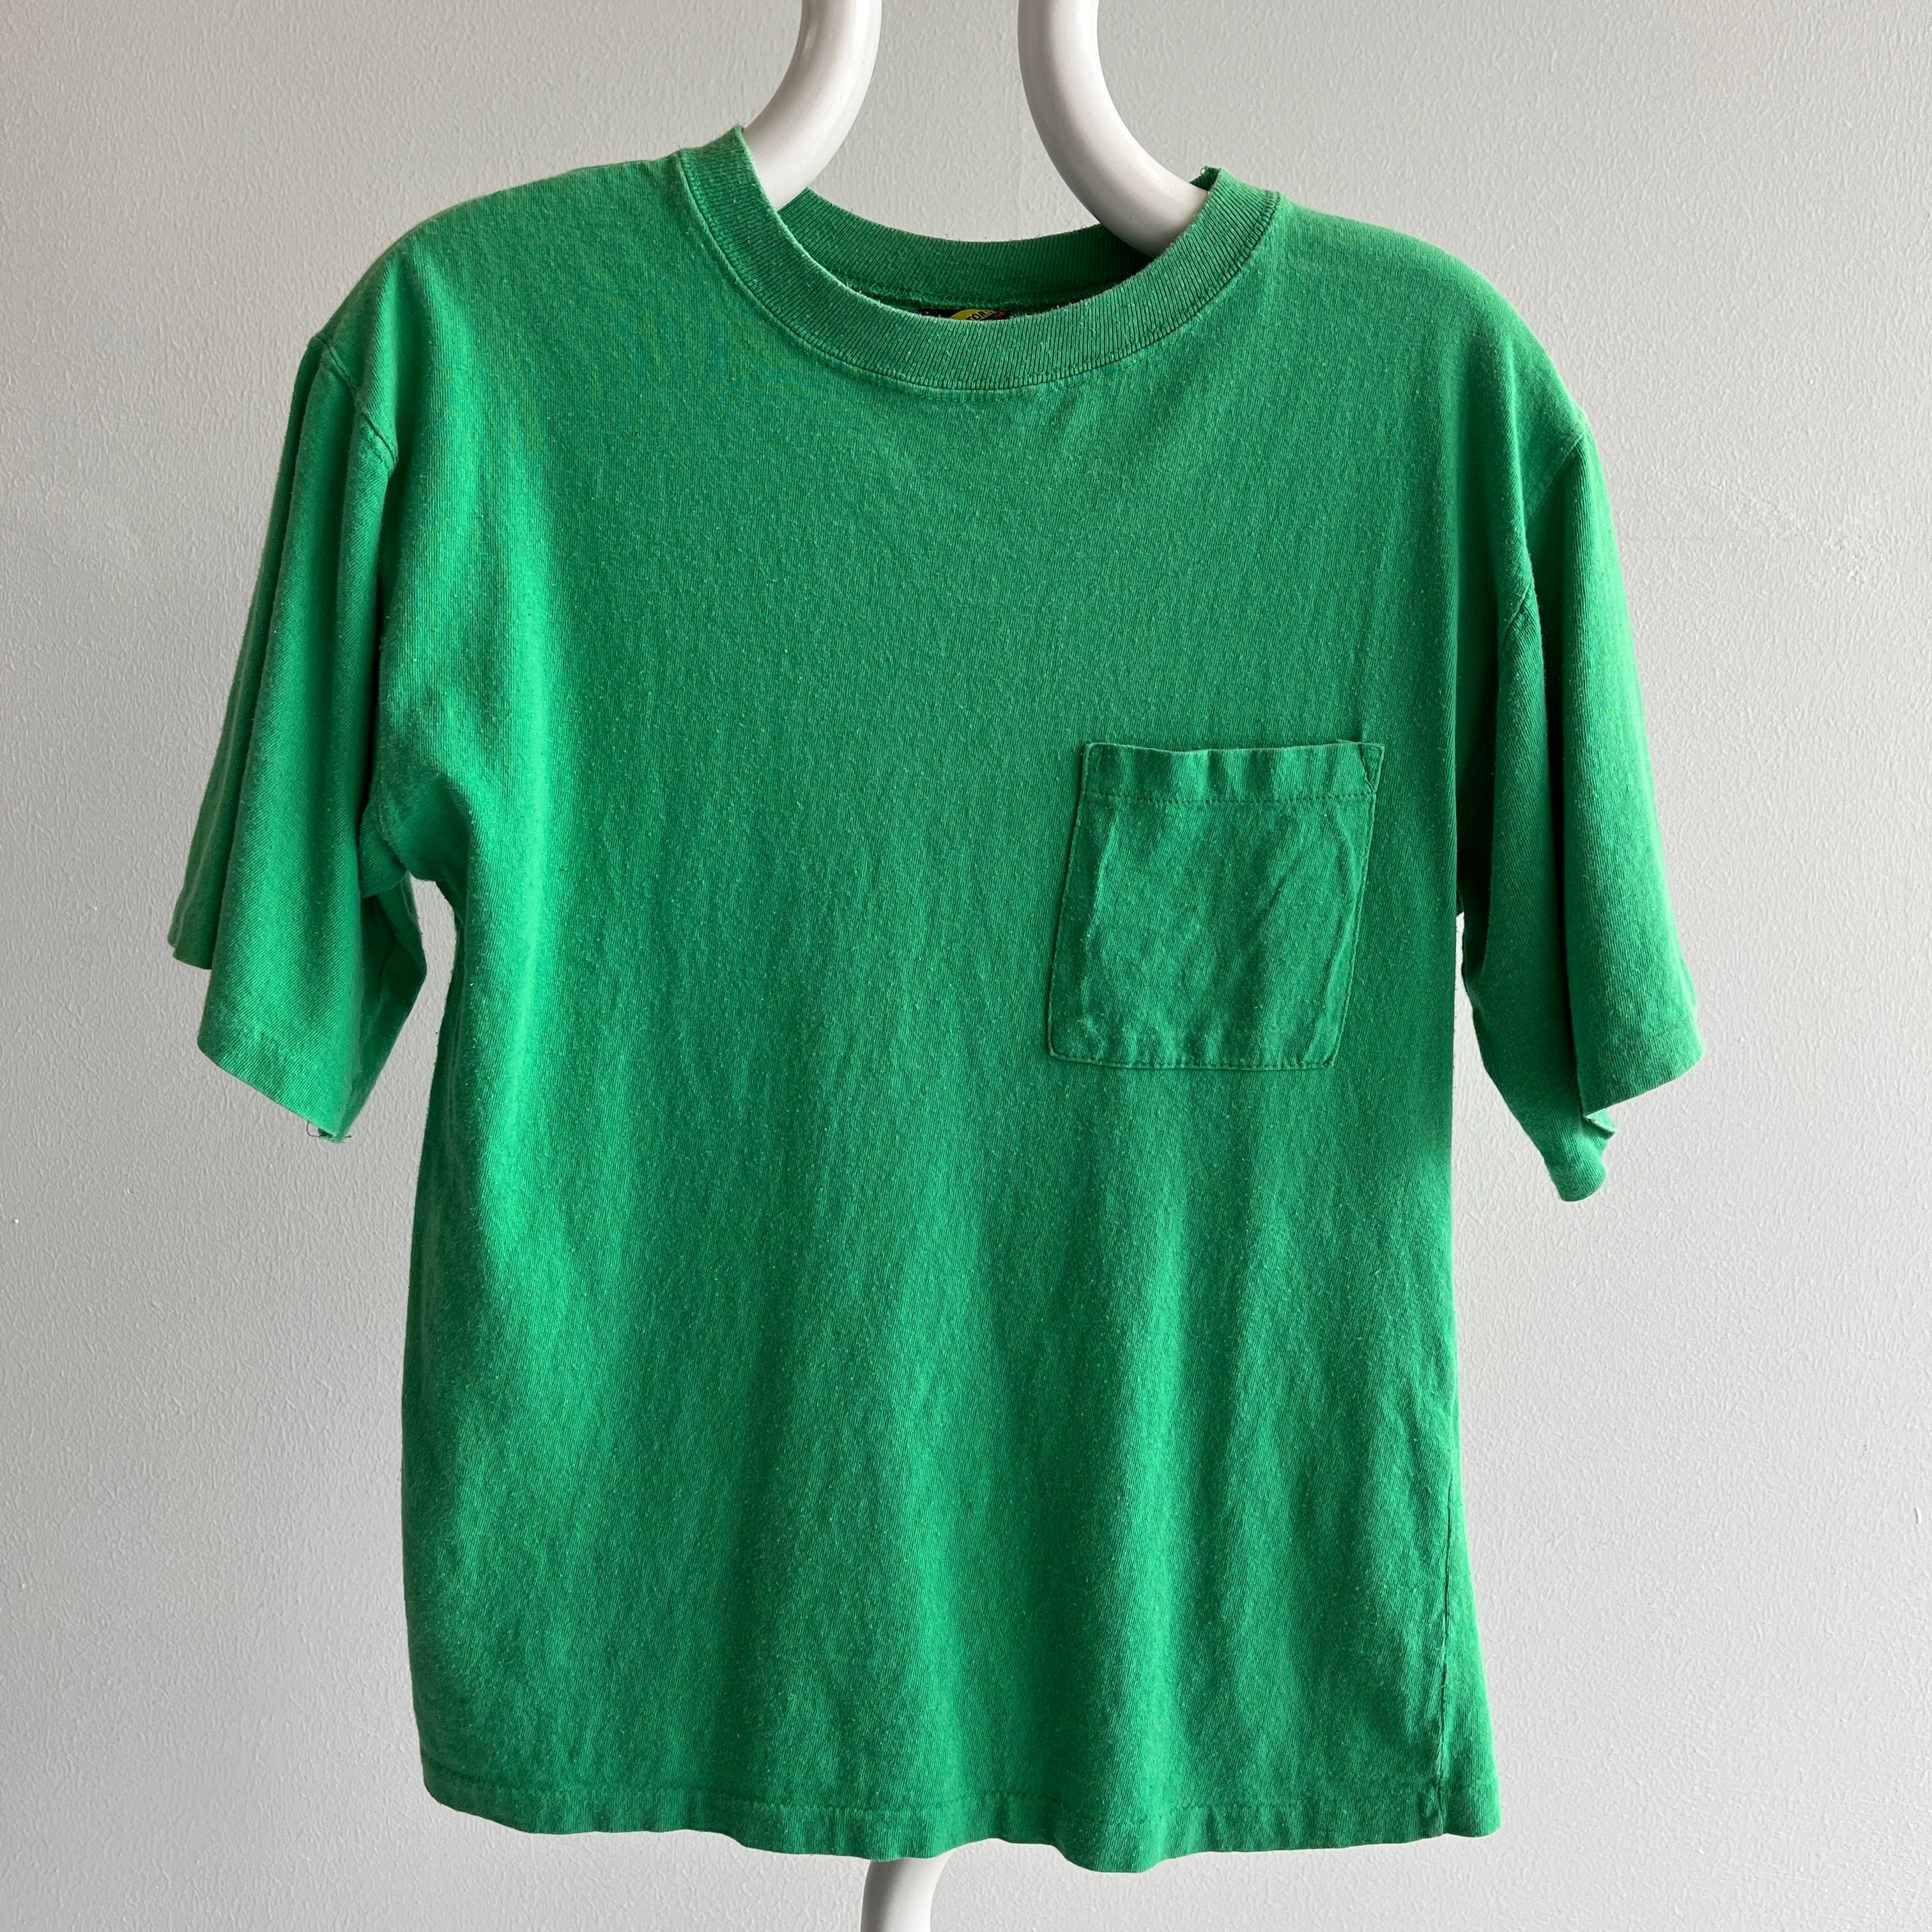 plain kelly green t shirt